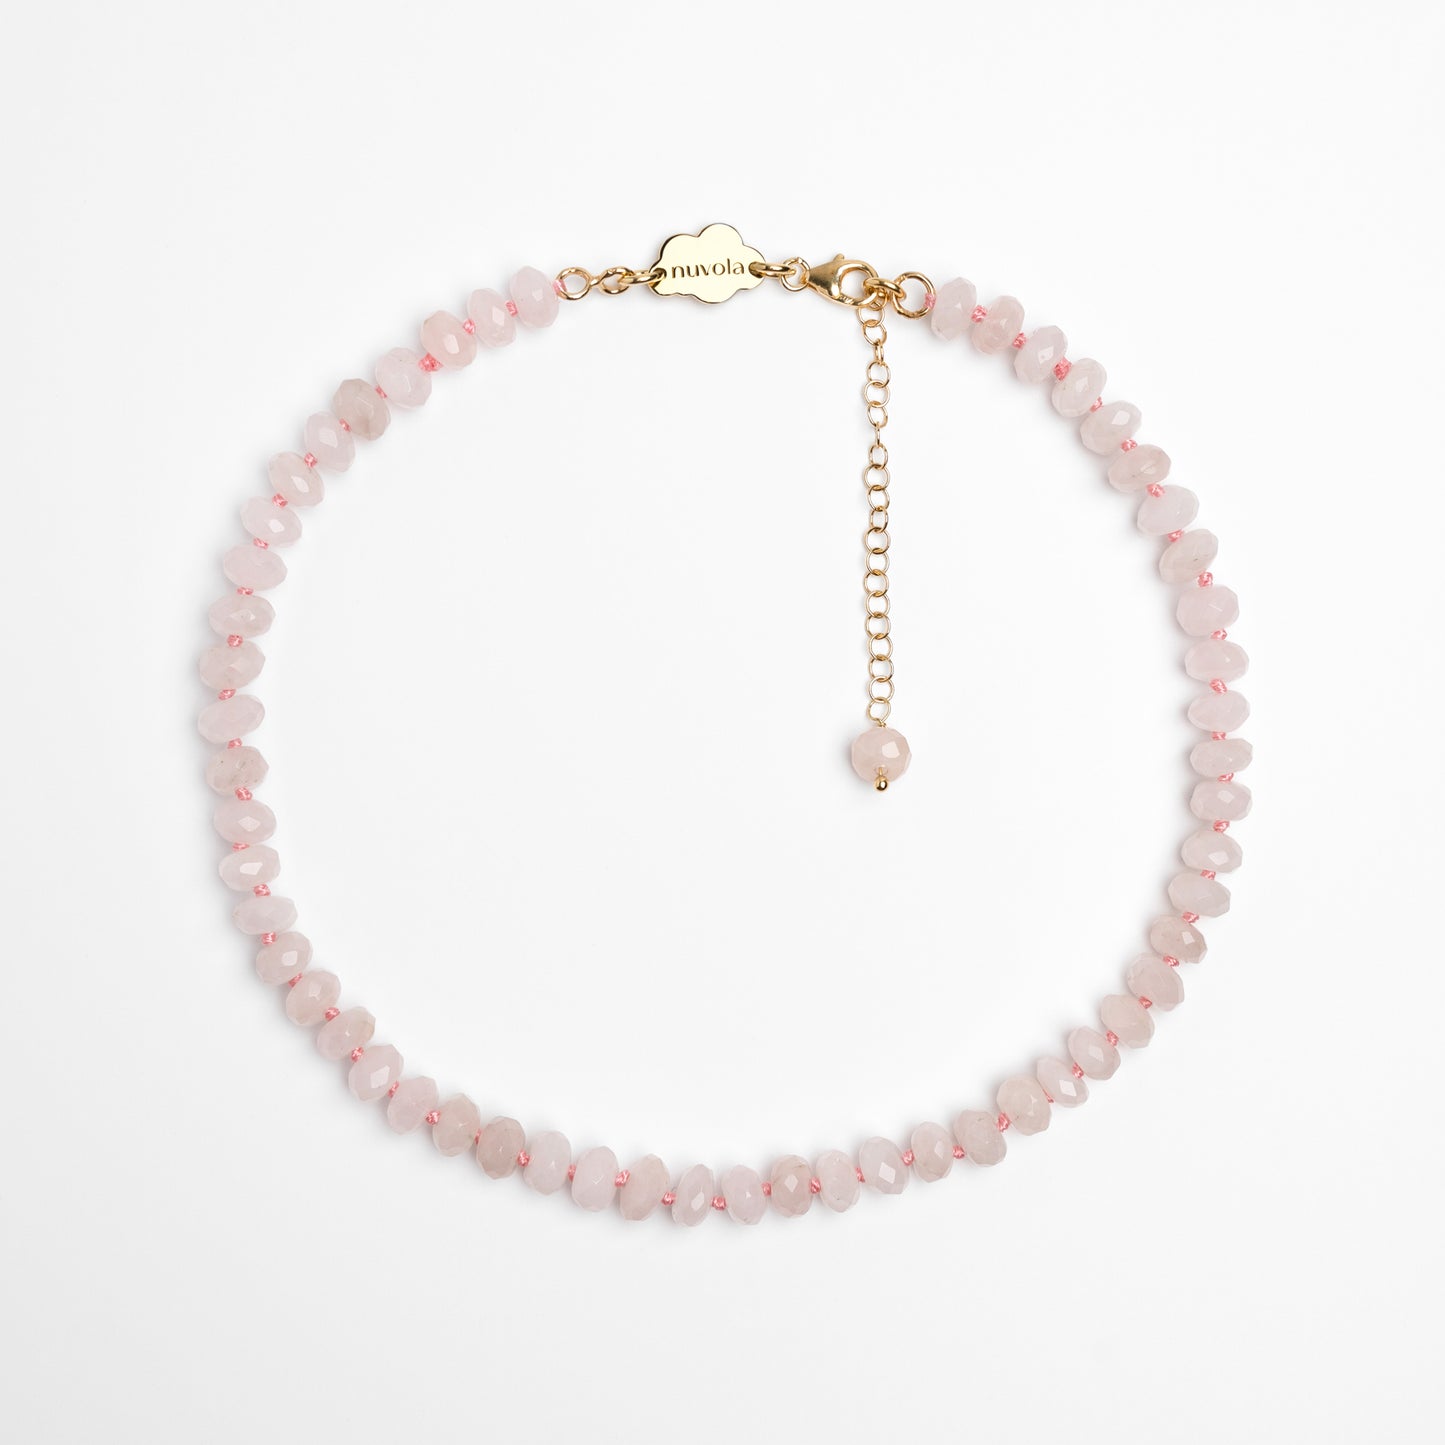 Rose quartz rondelle necklace